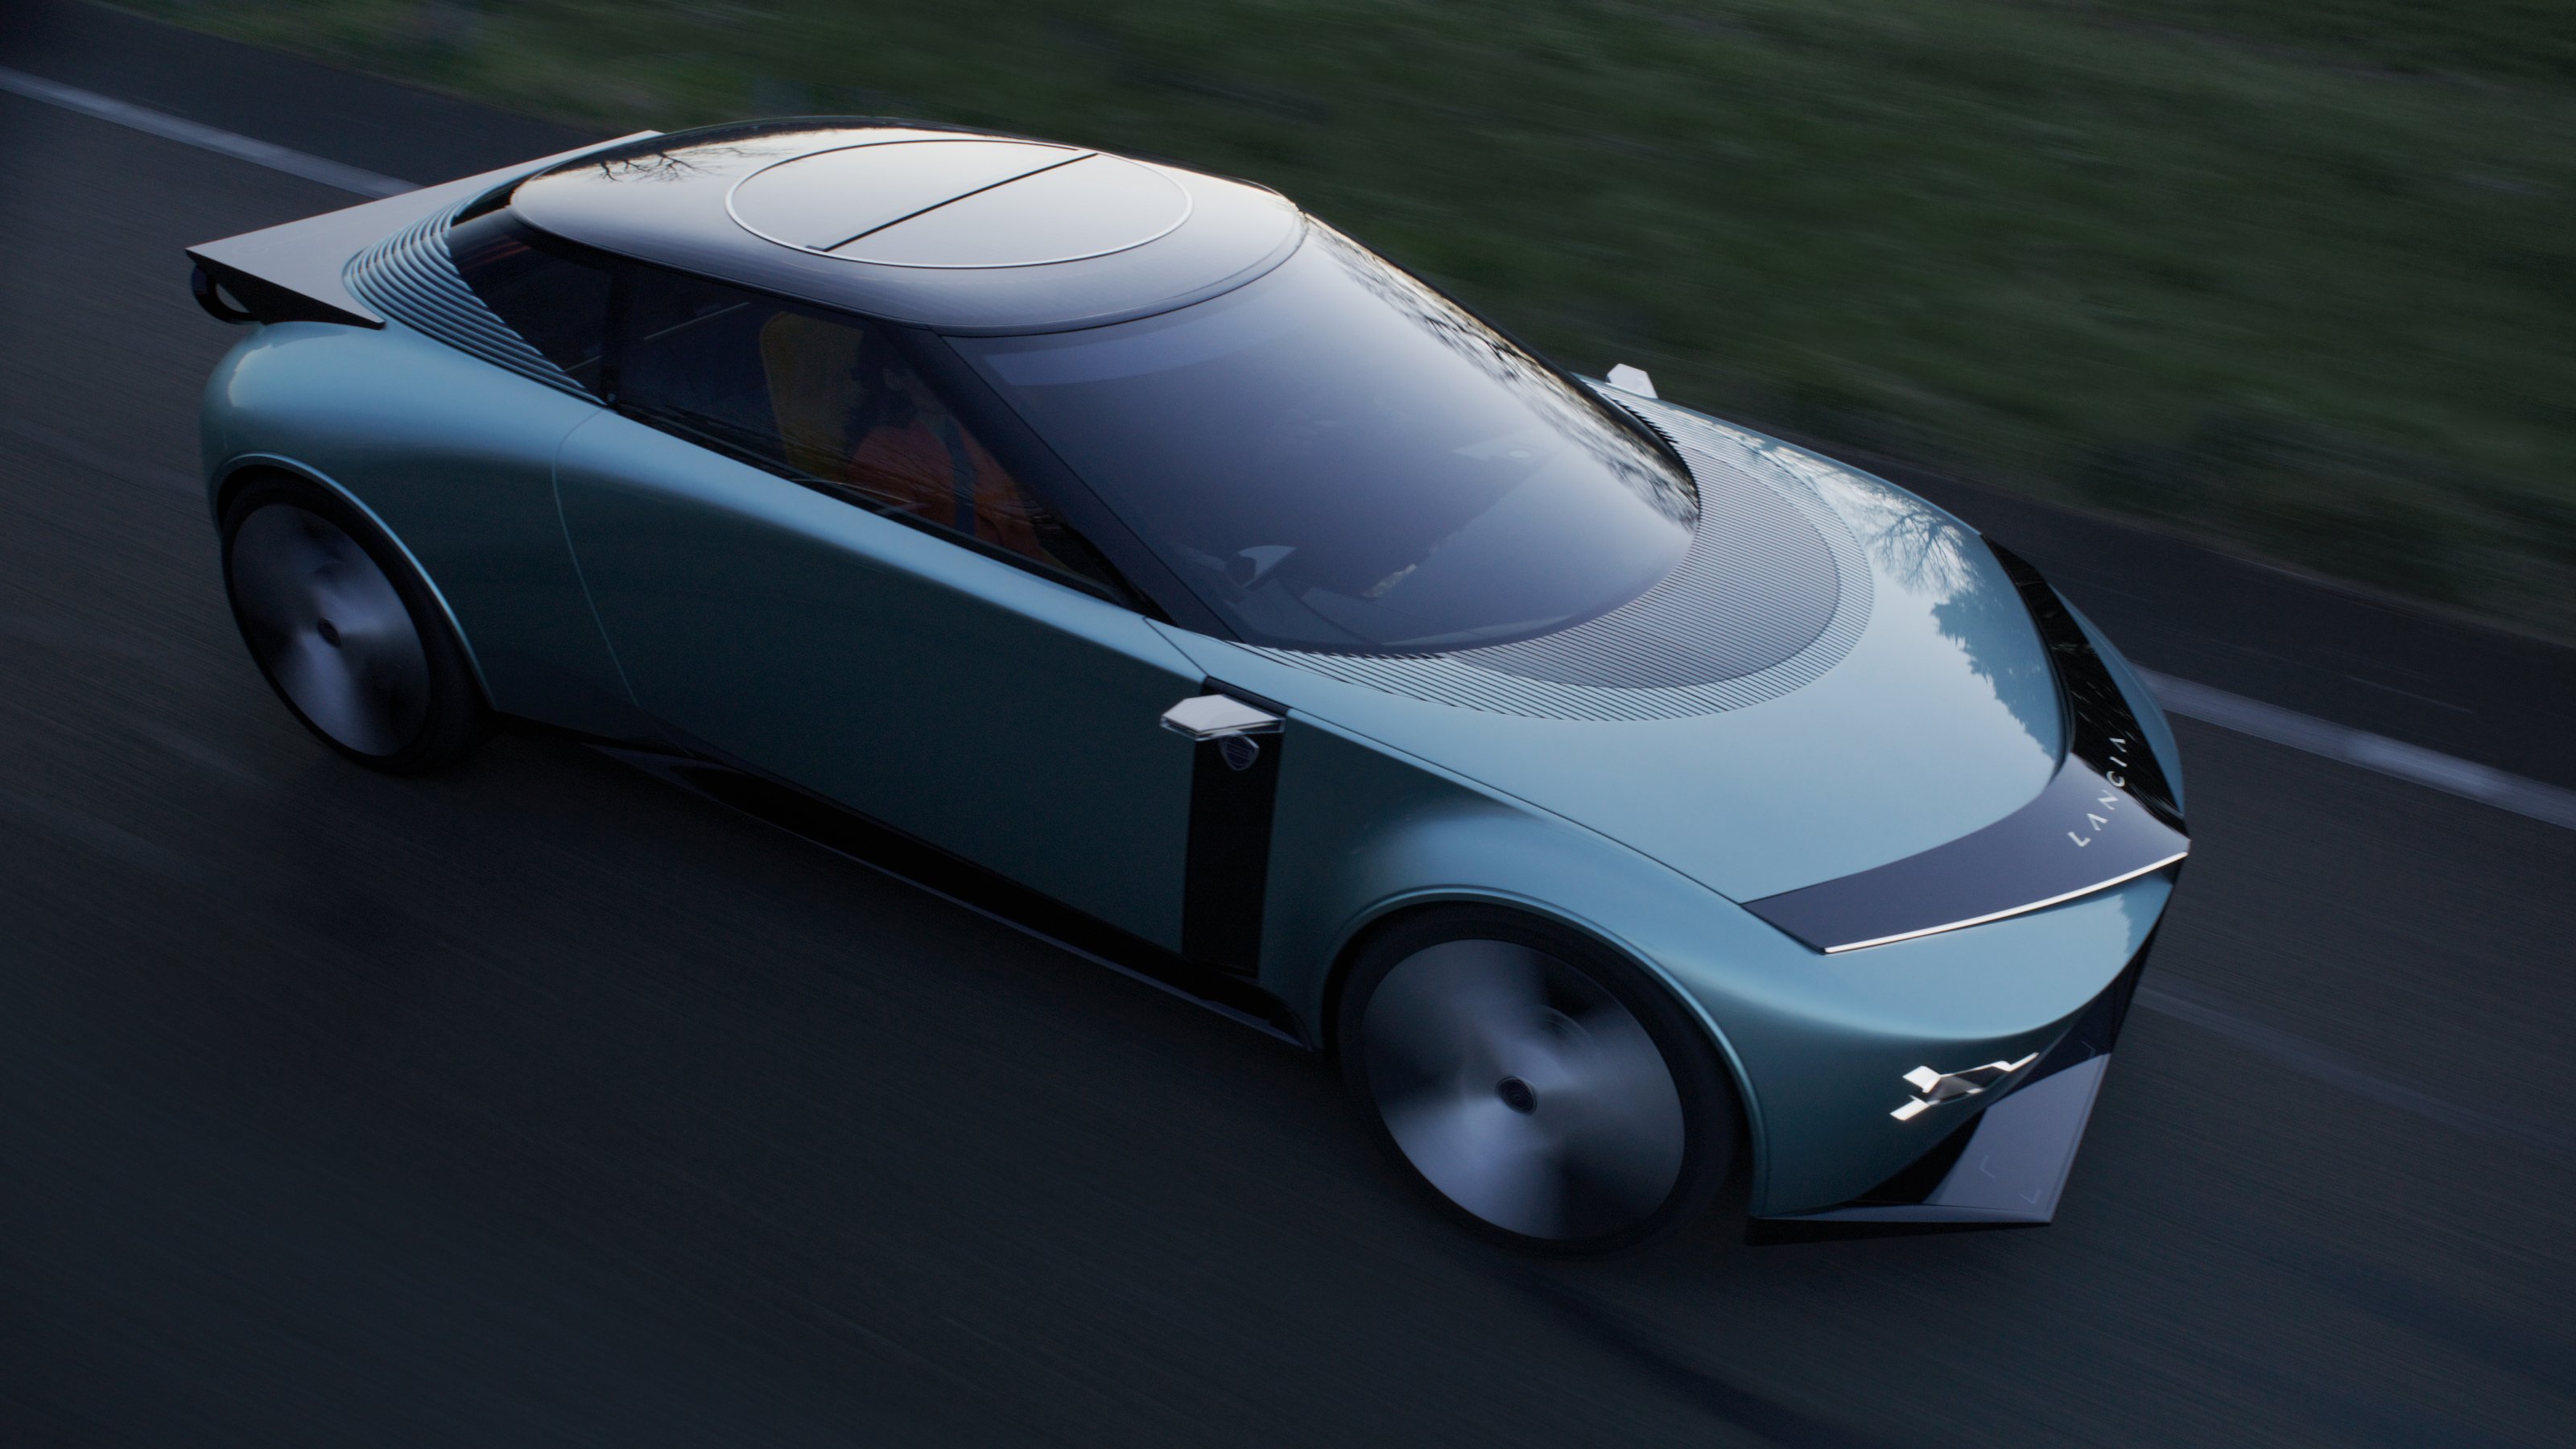 Auto Shanghai 2023 concept cars: future mobility takes…